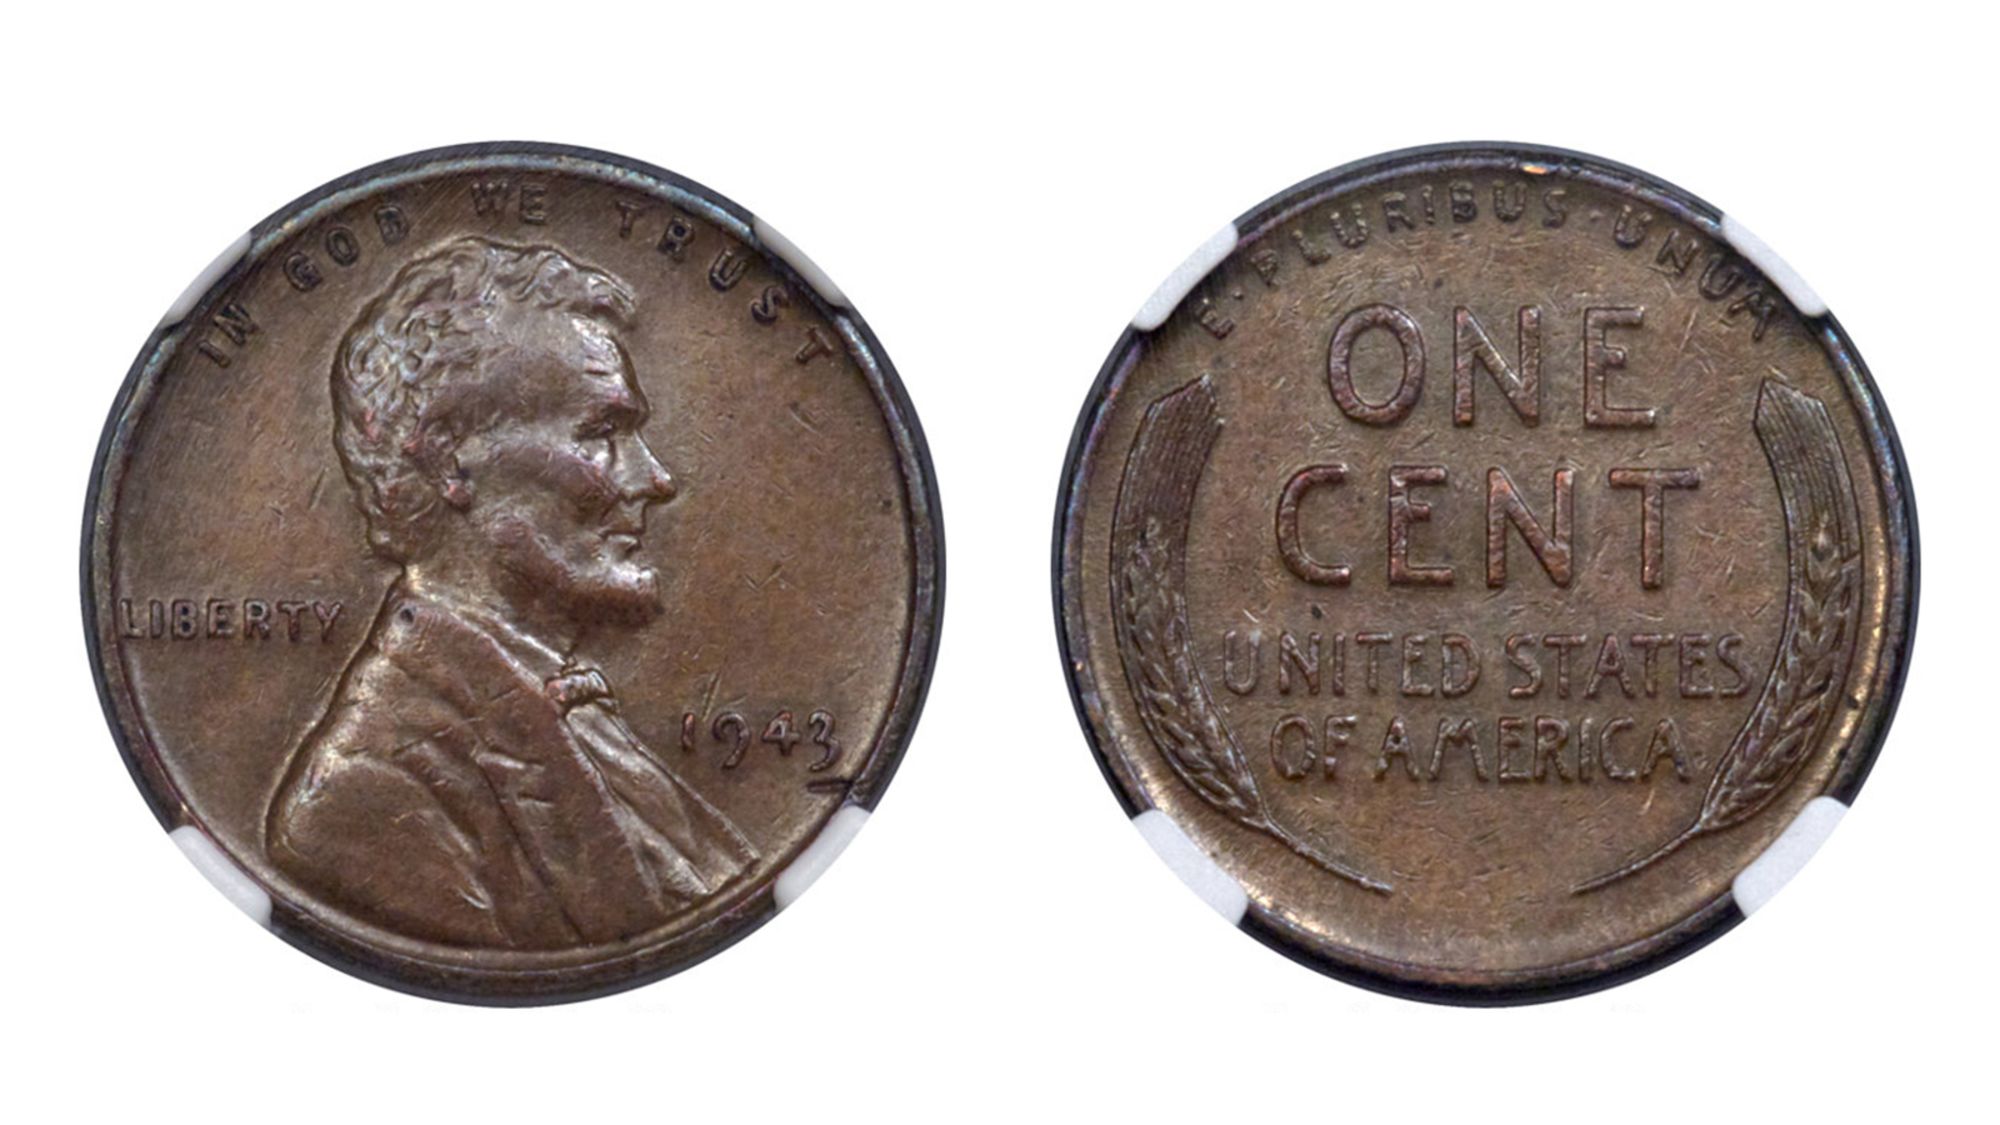 https://media.cnn.com/api/v1/images/stellar/prod/190109214629-1943-copper-penny-auction.jpg?q=w_2000,c_fill